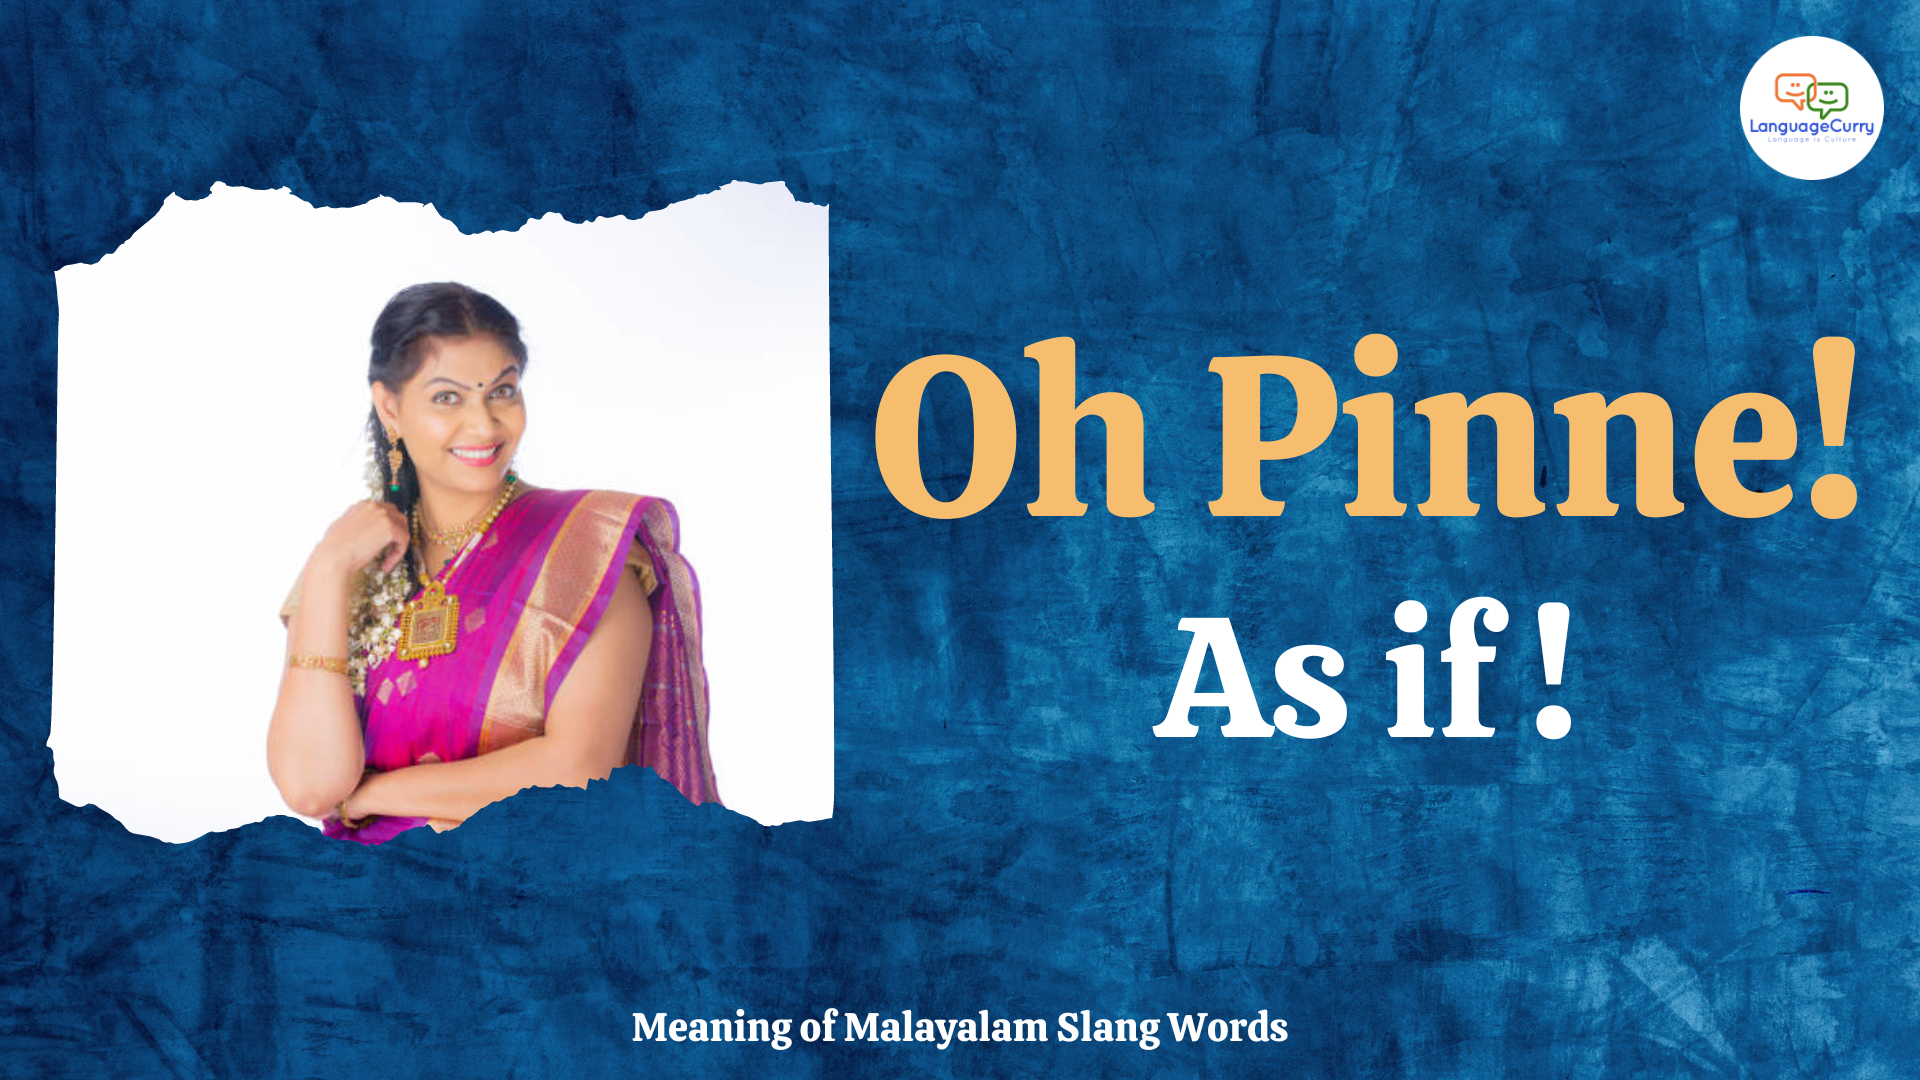 Malayalam slang word oh pinne!